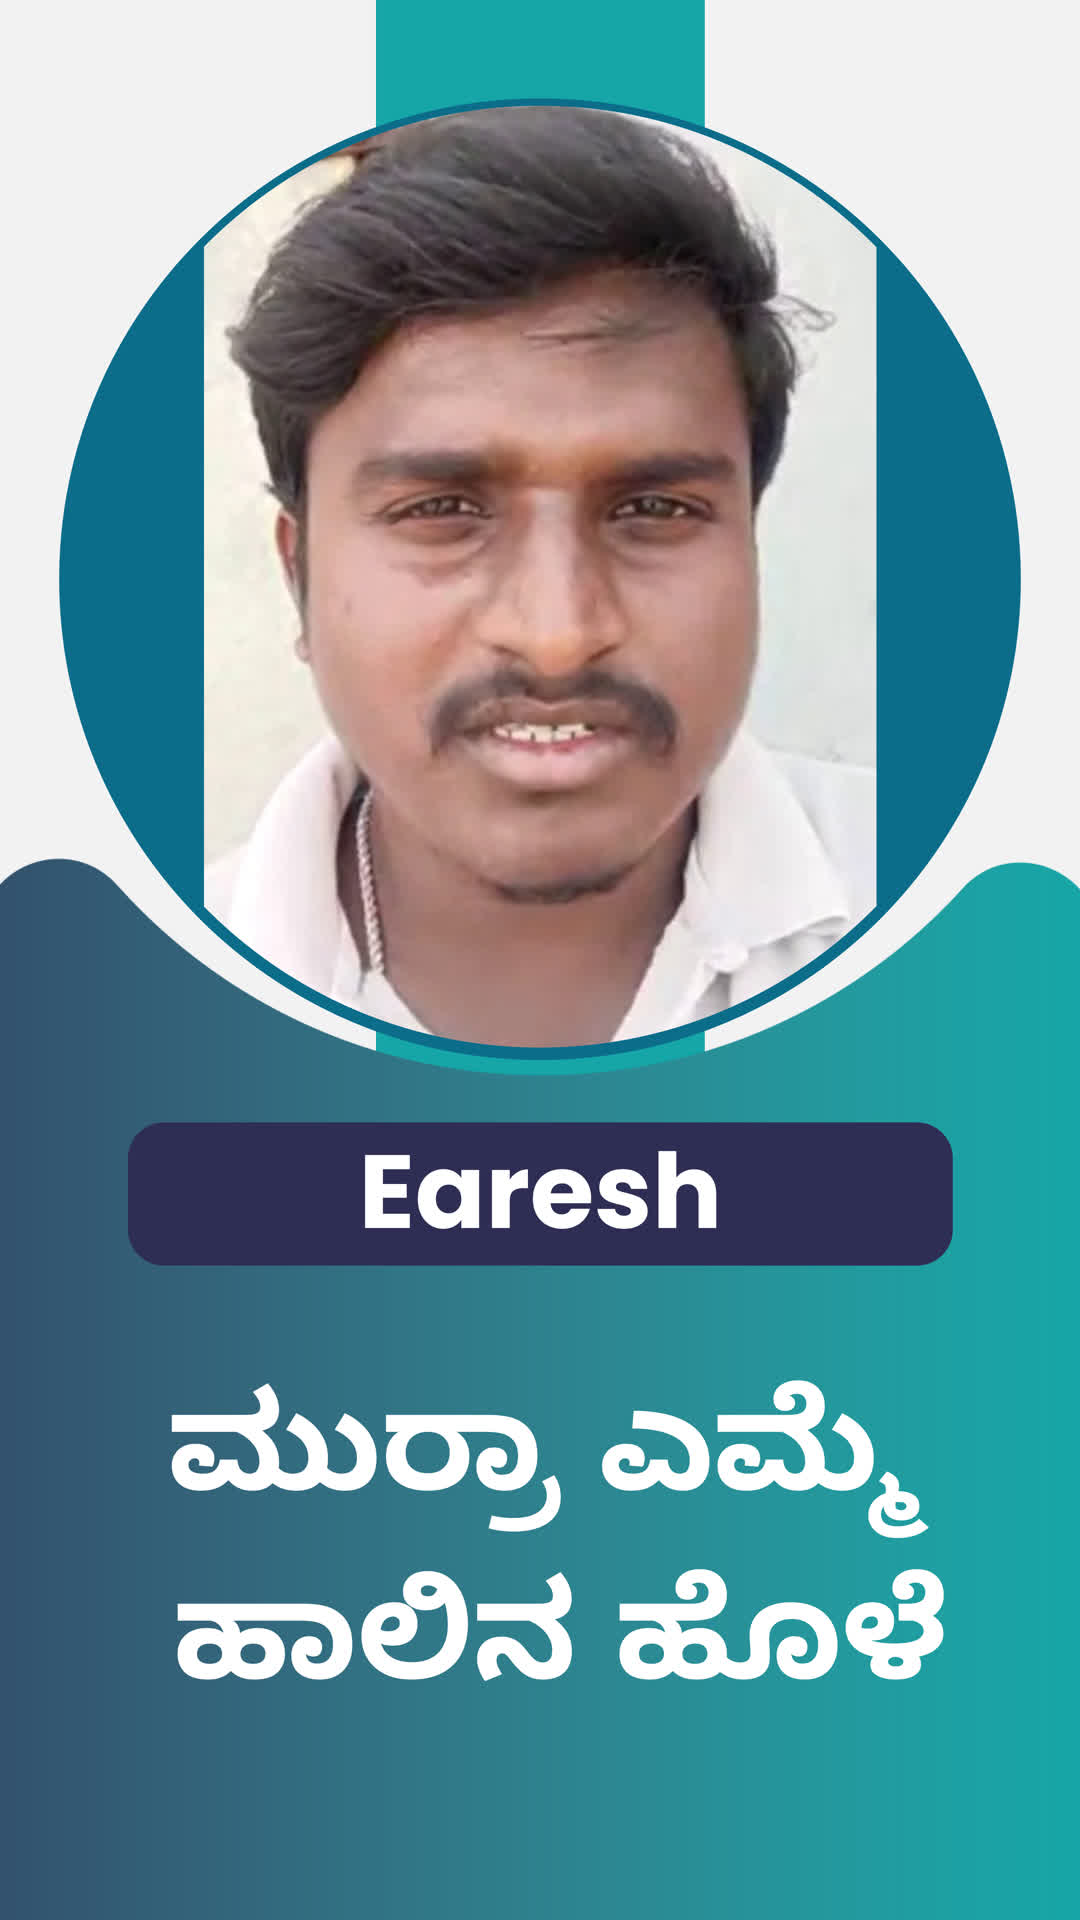 Earesh's Honest Review of ffreedom app - Raichur ,Karnataka